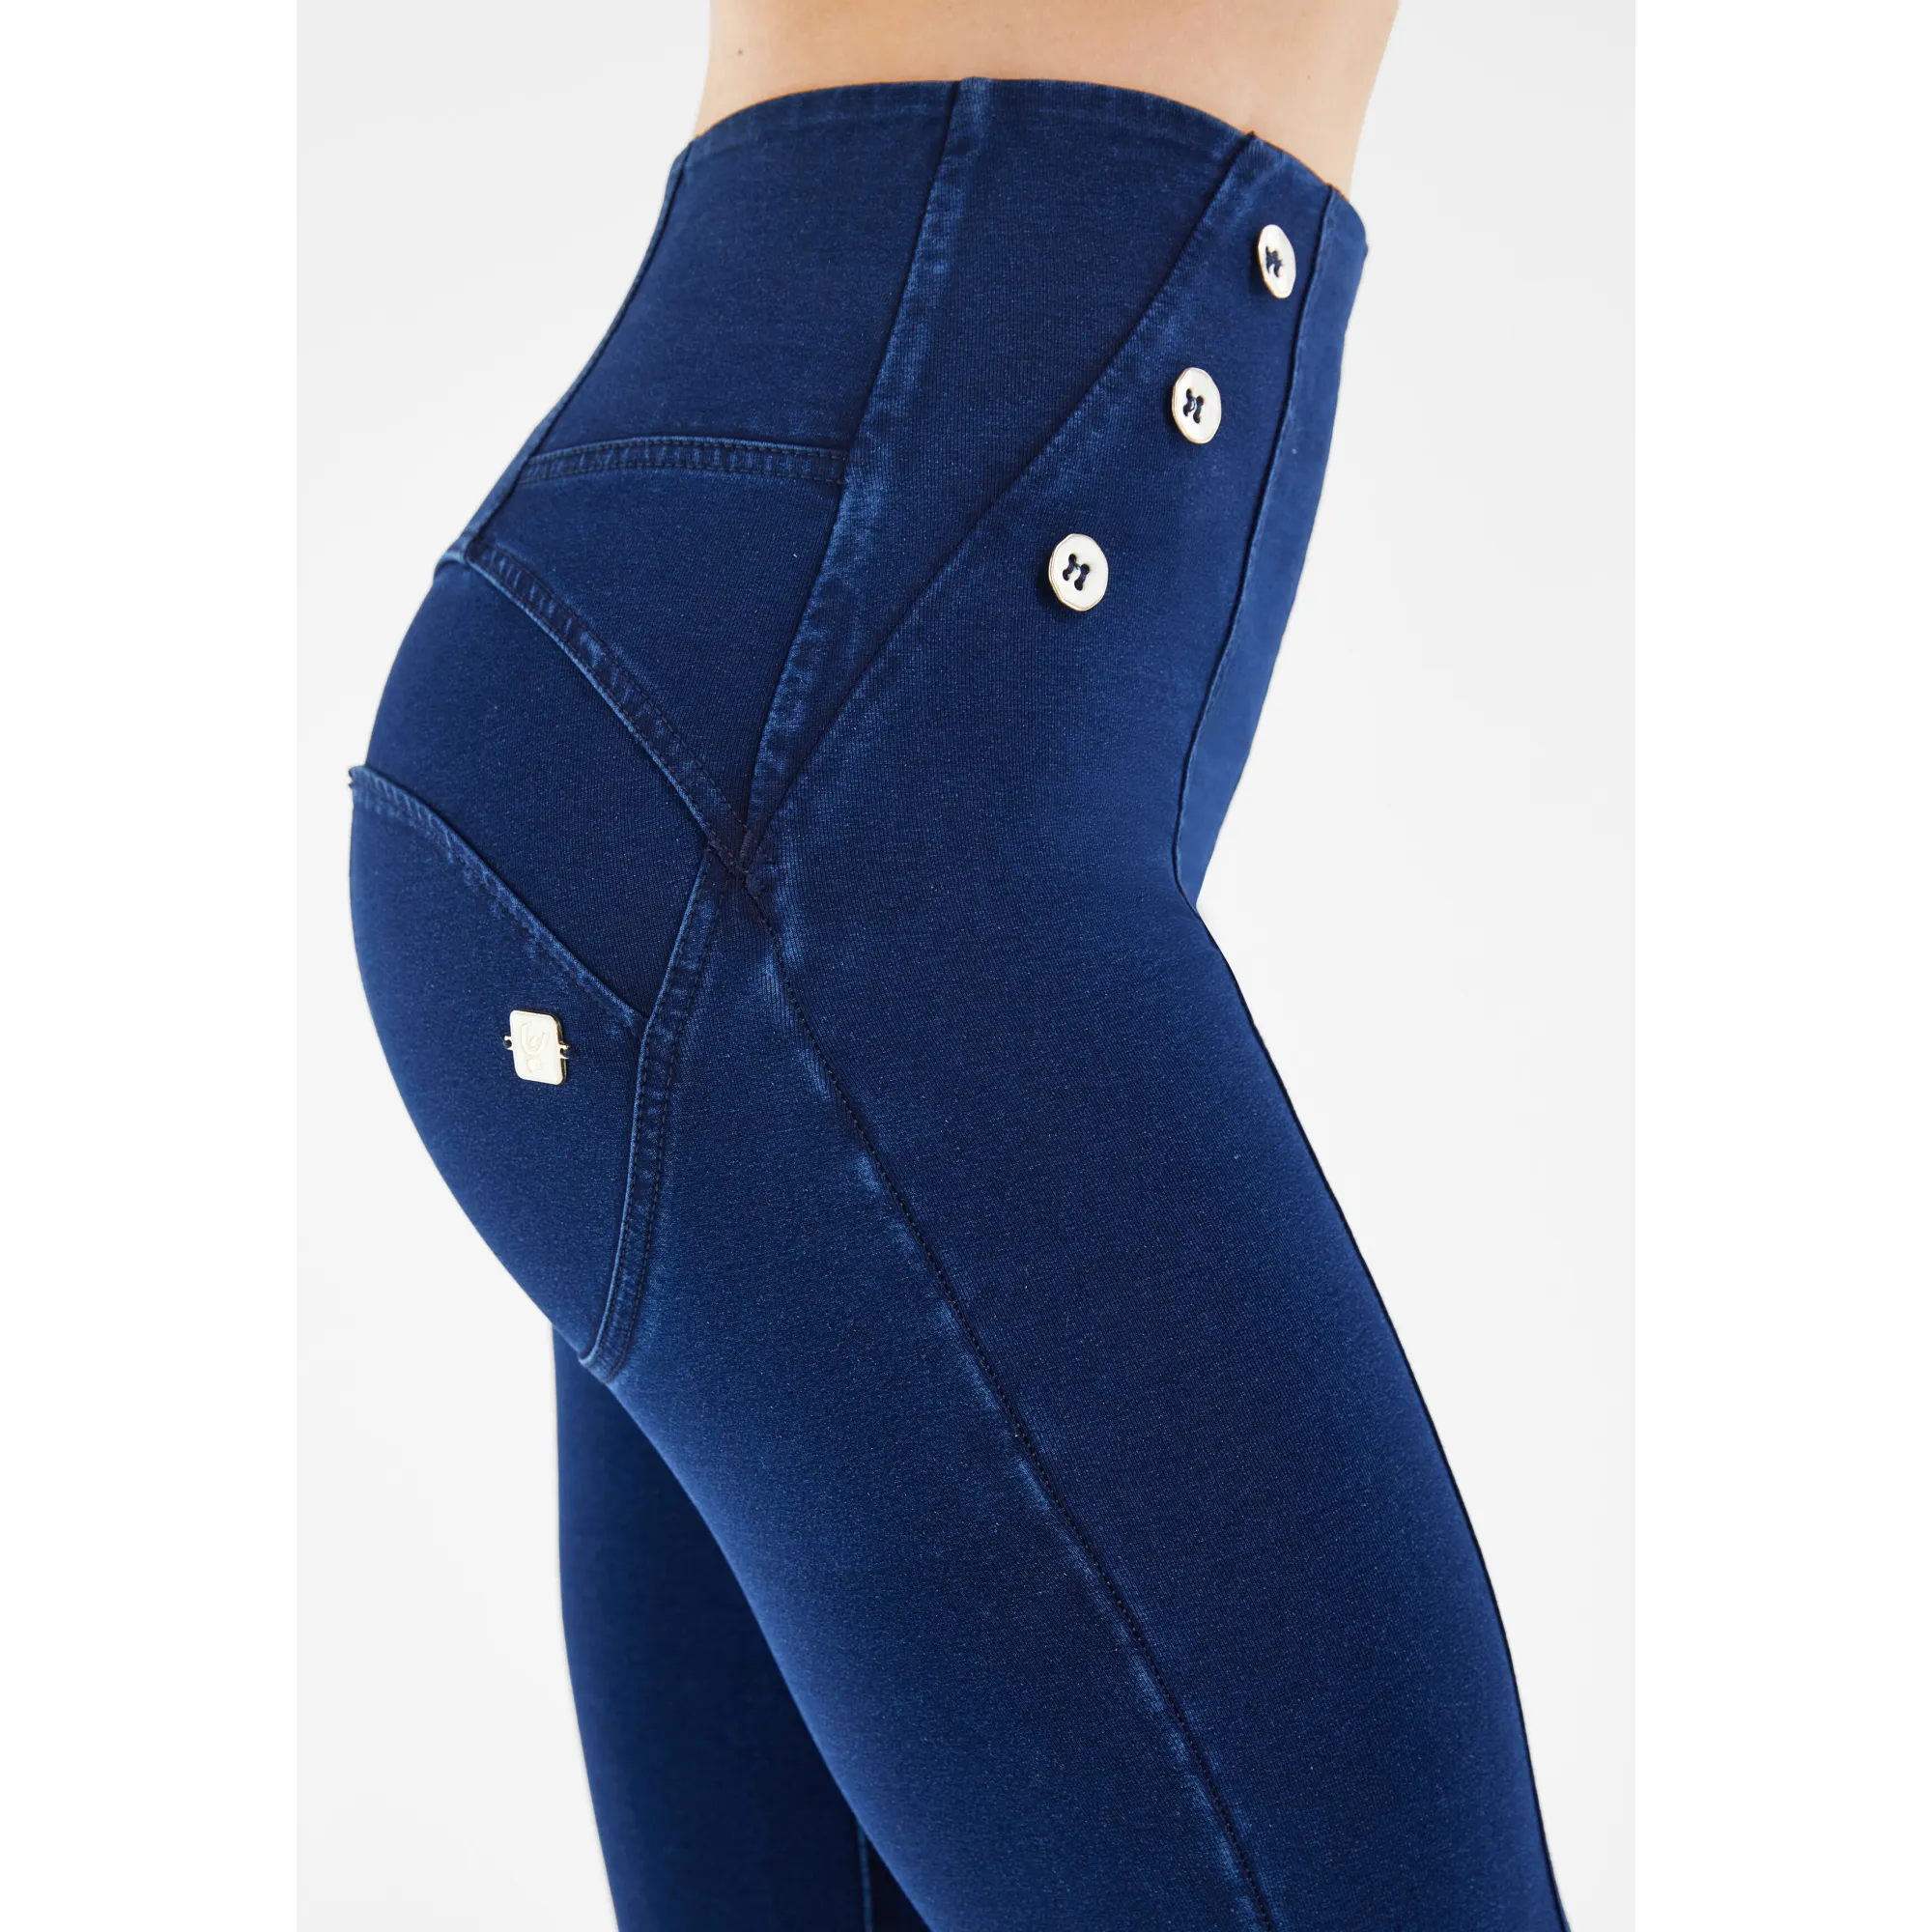 Freddy WR.UP® Damen Push-Up Jeans - High Waist Super Skinny - Dekorative Knöpfe - Indigoblau - Blaue Nähte - J0B